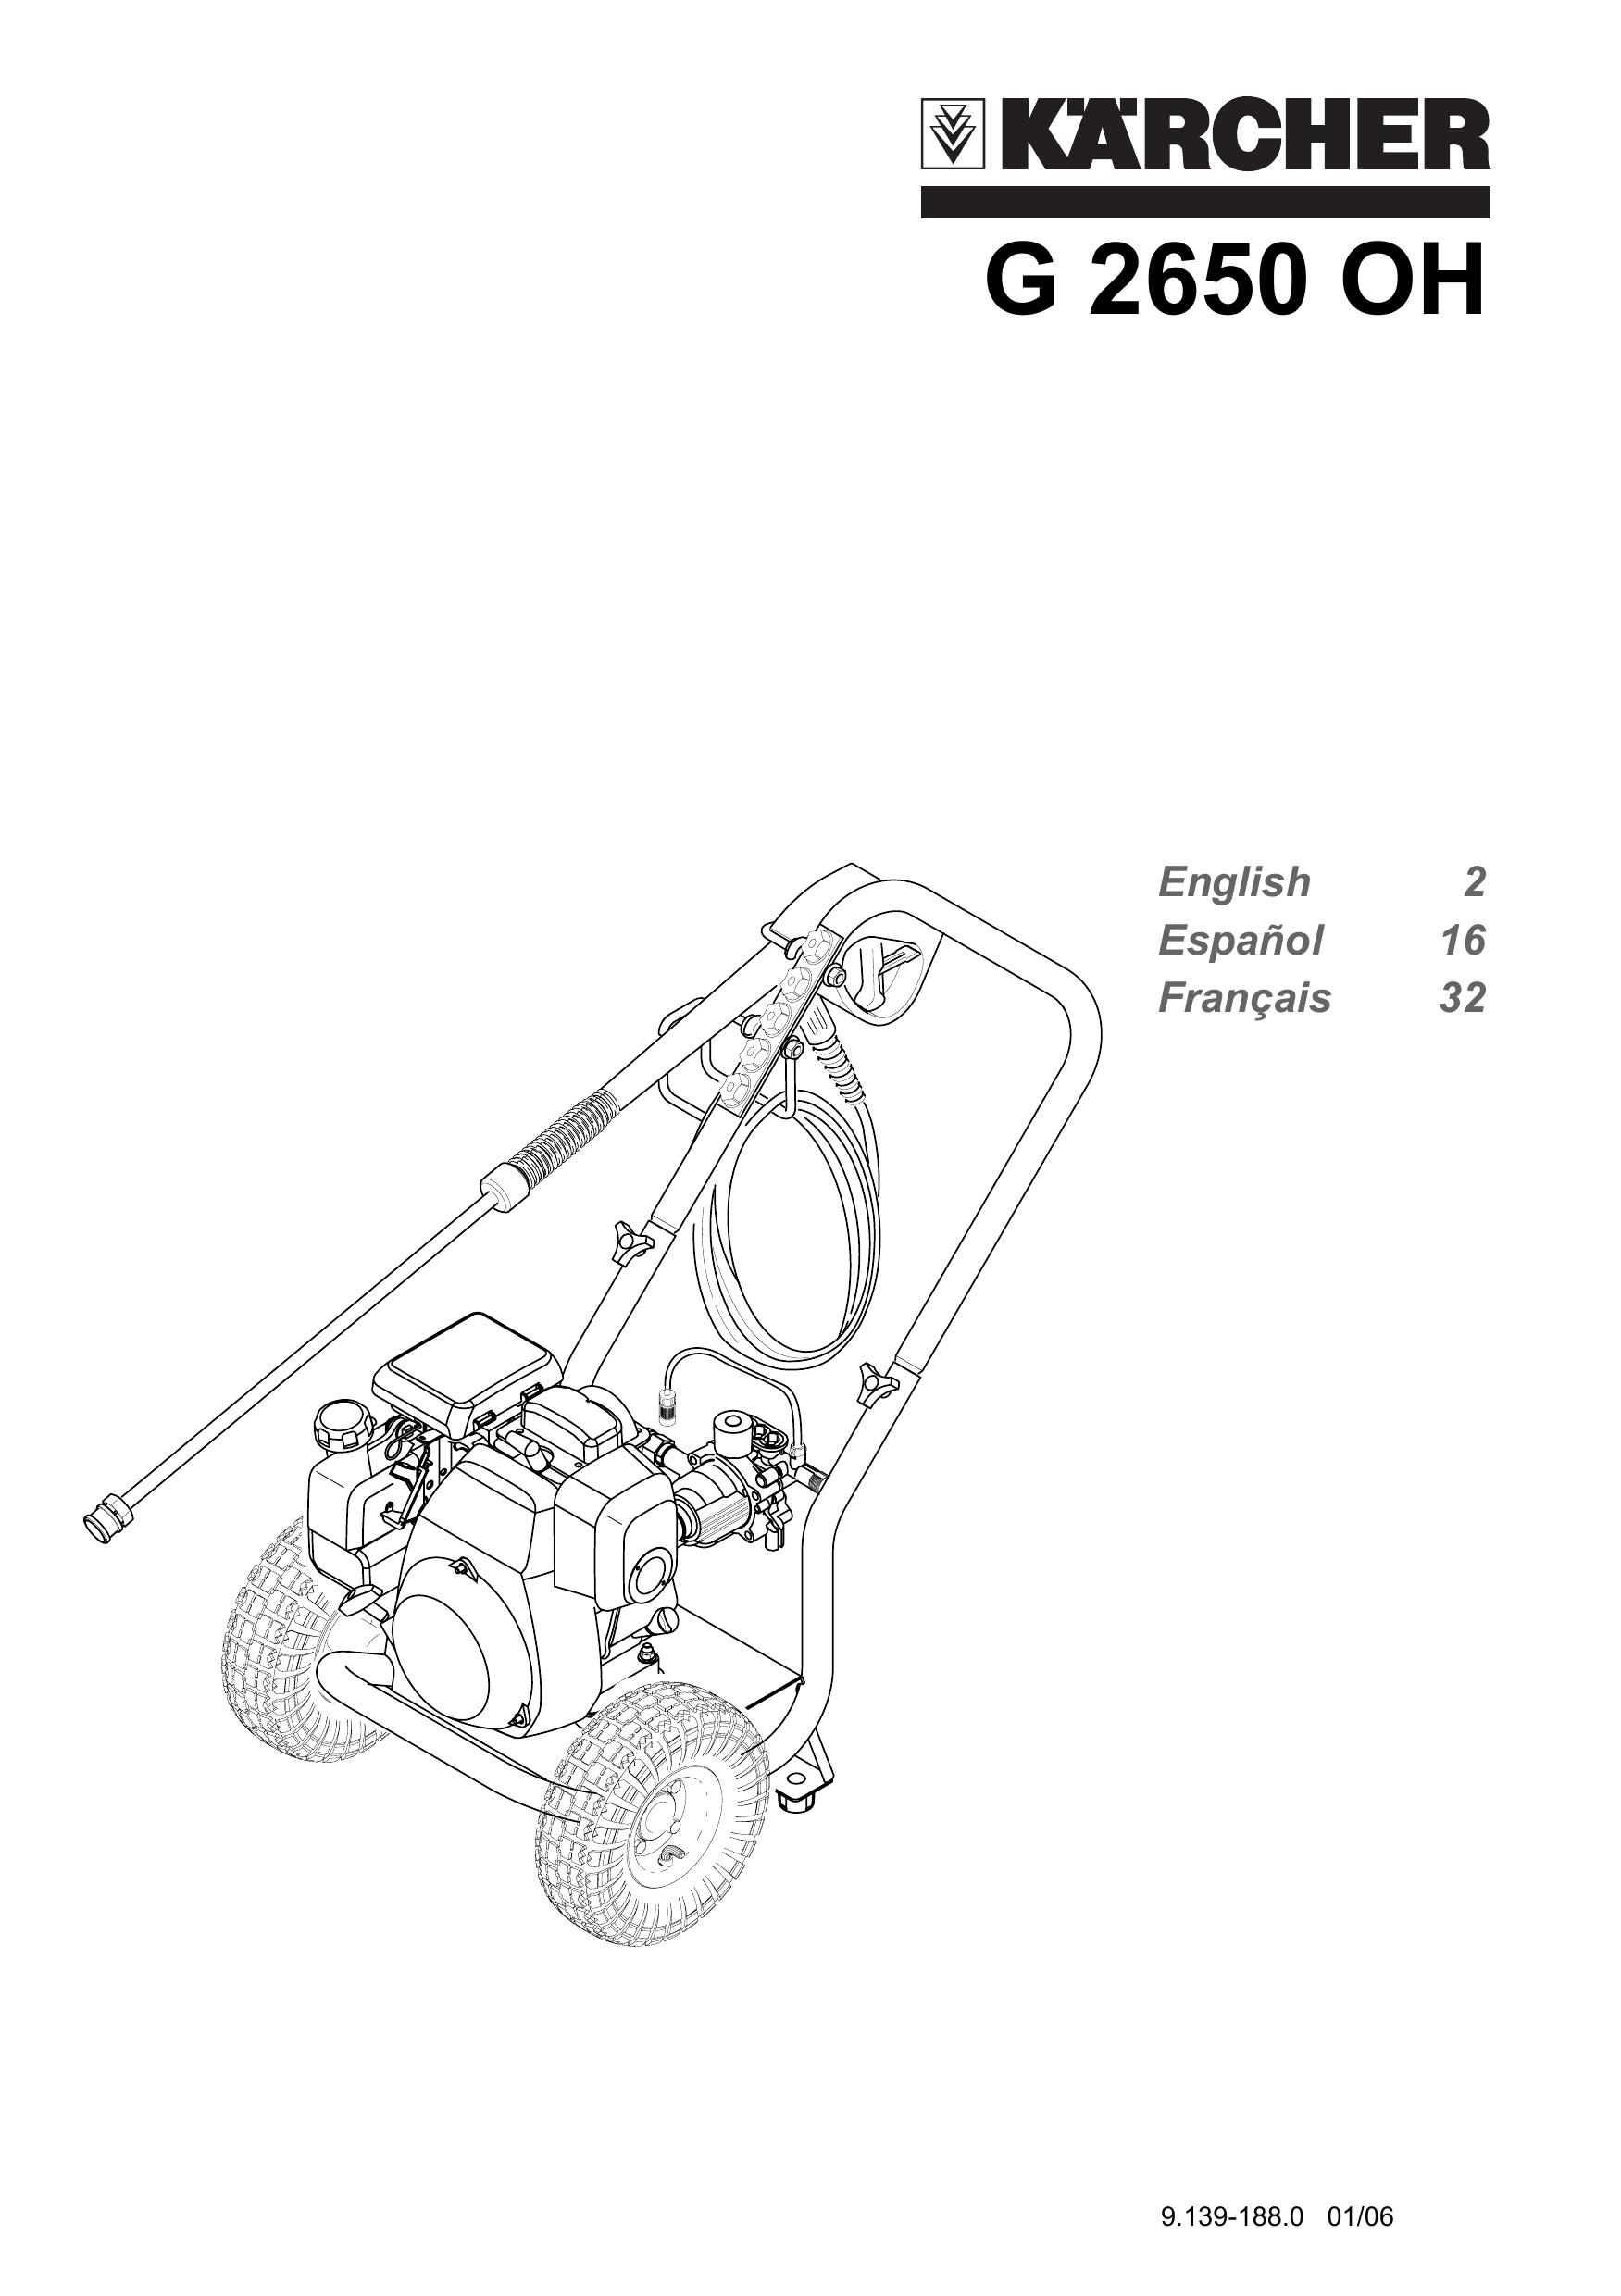 Karcher G 2650 OH Pressure Washer User Manual